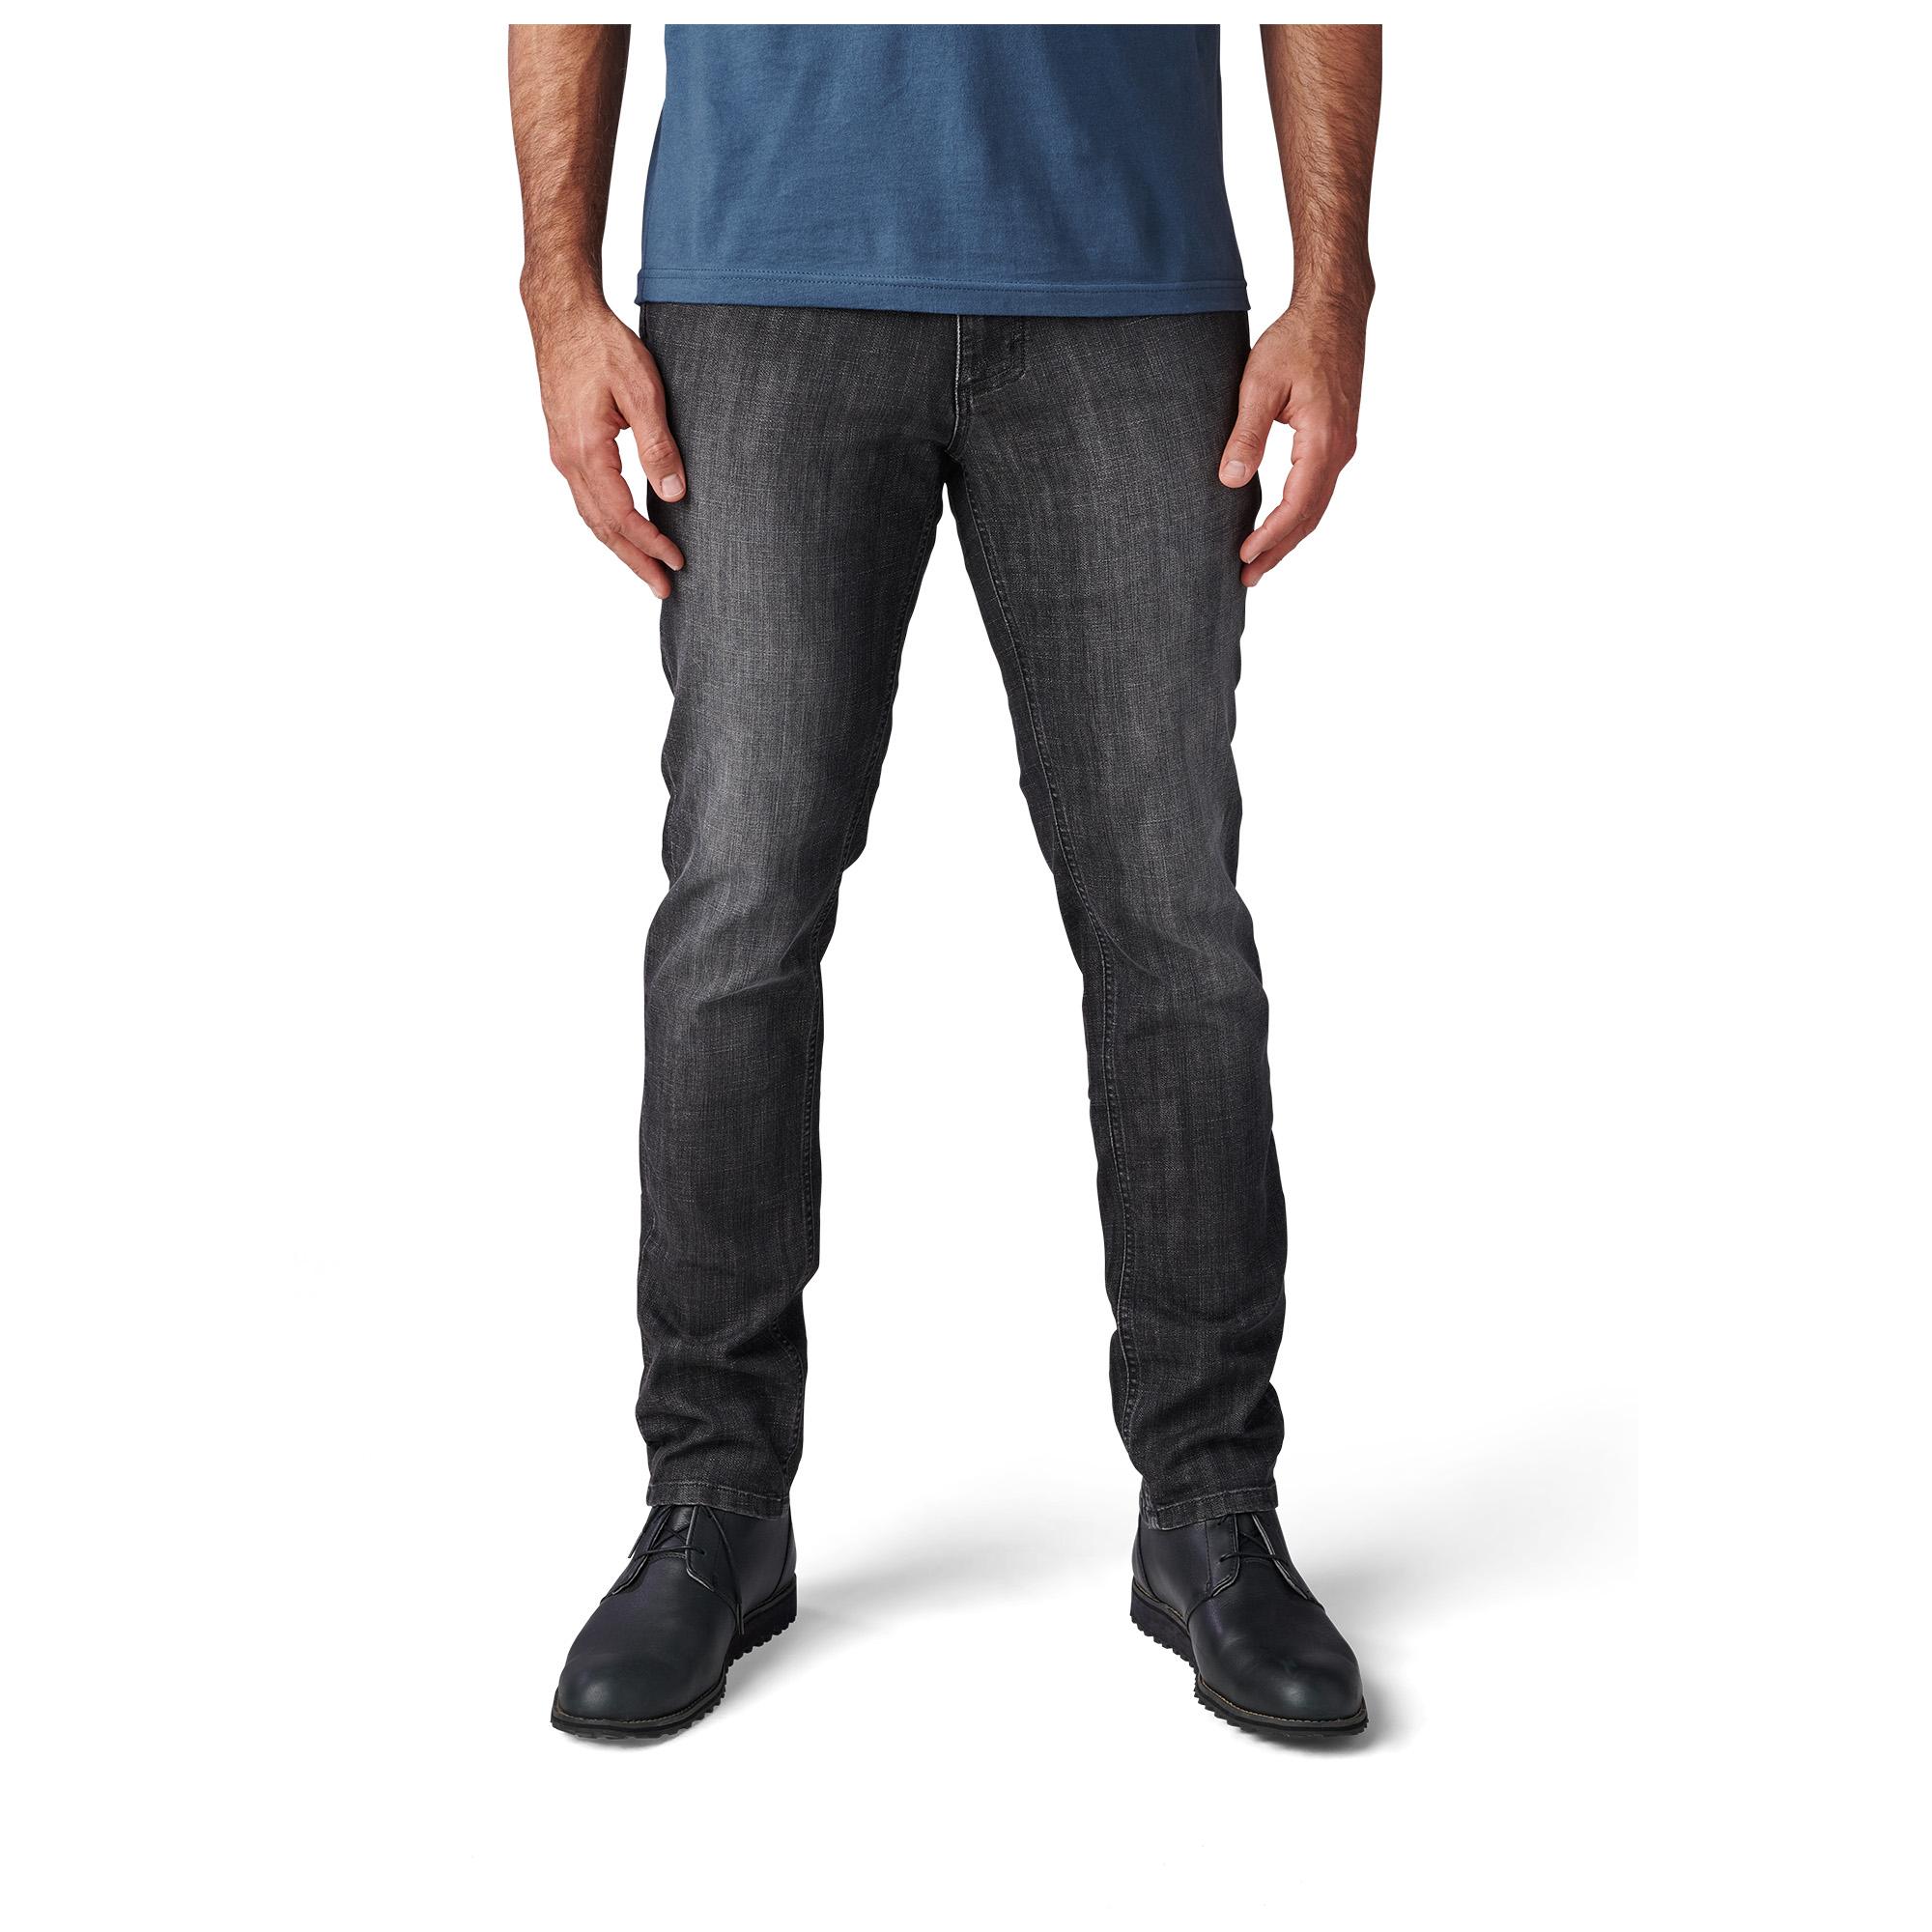 Defender-flex jean-slim - Pants & shorts